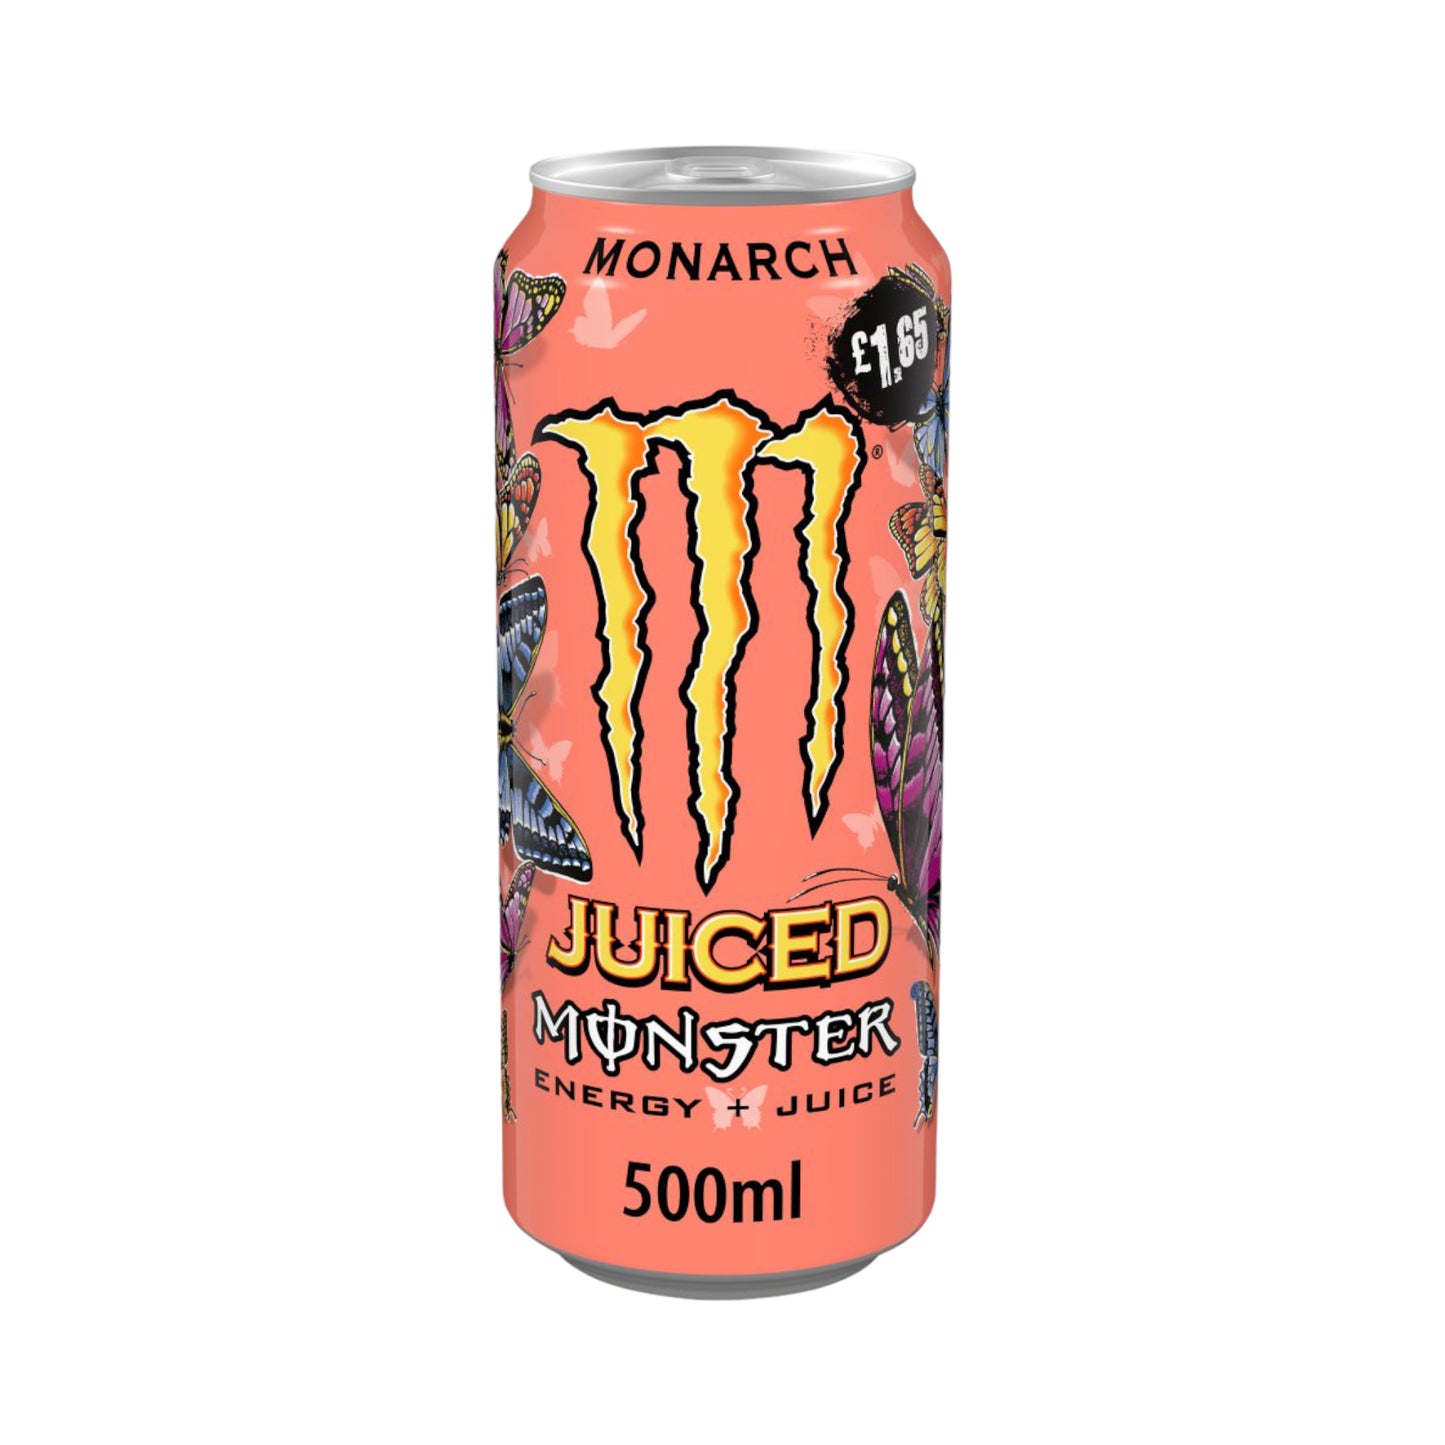 Monster Energy Drink Monarch - 500ml (PMP £1.65)